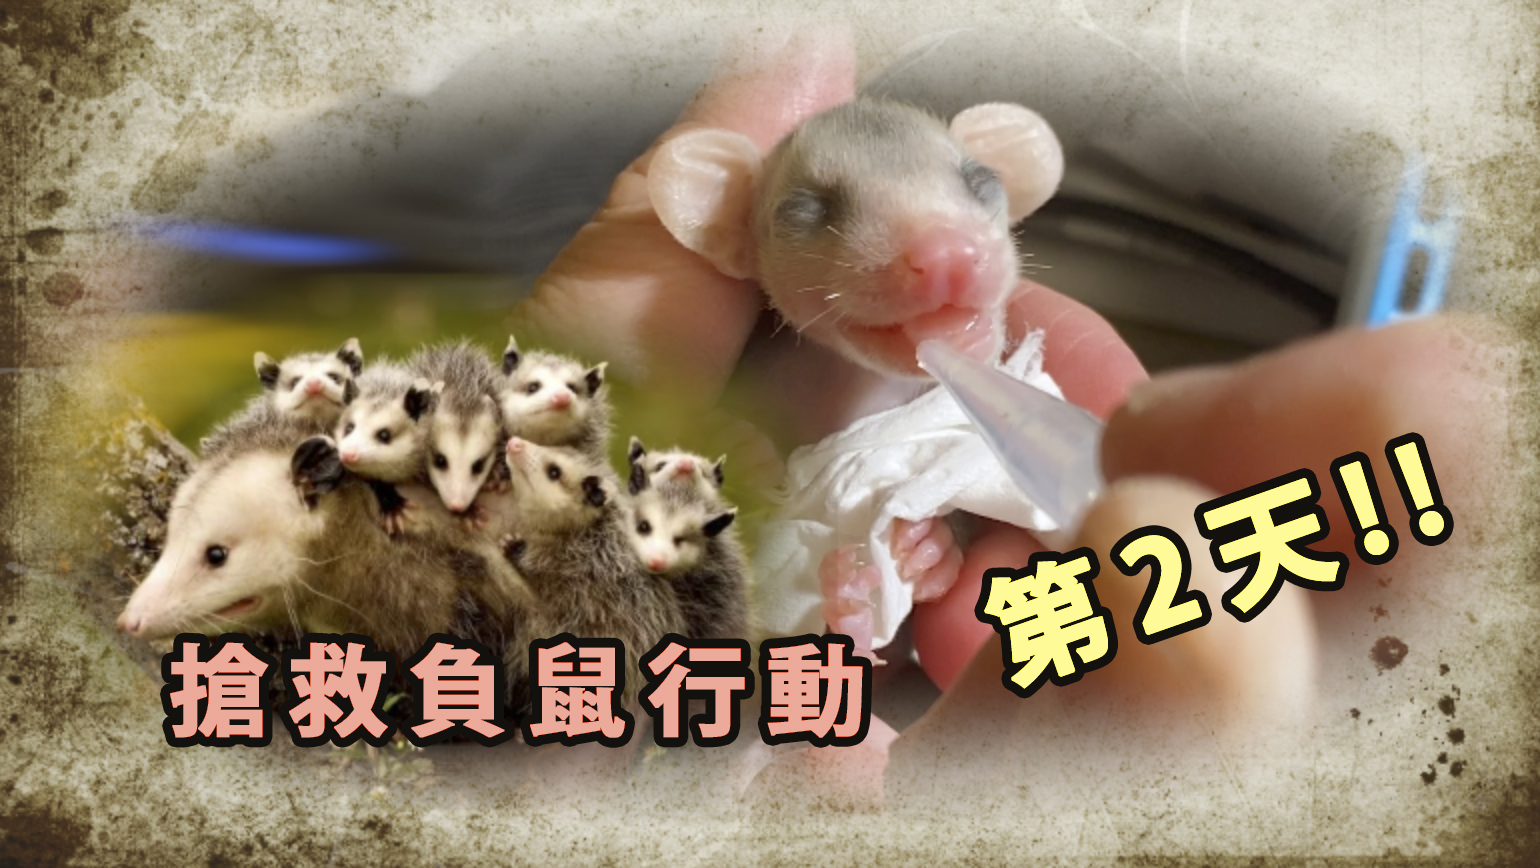 搶救負鼠行動第2天! Rescuing and Raising a Baby Opossum!